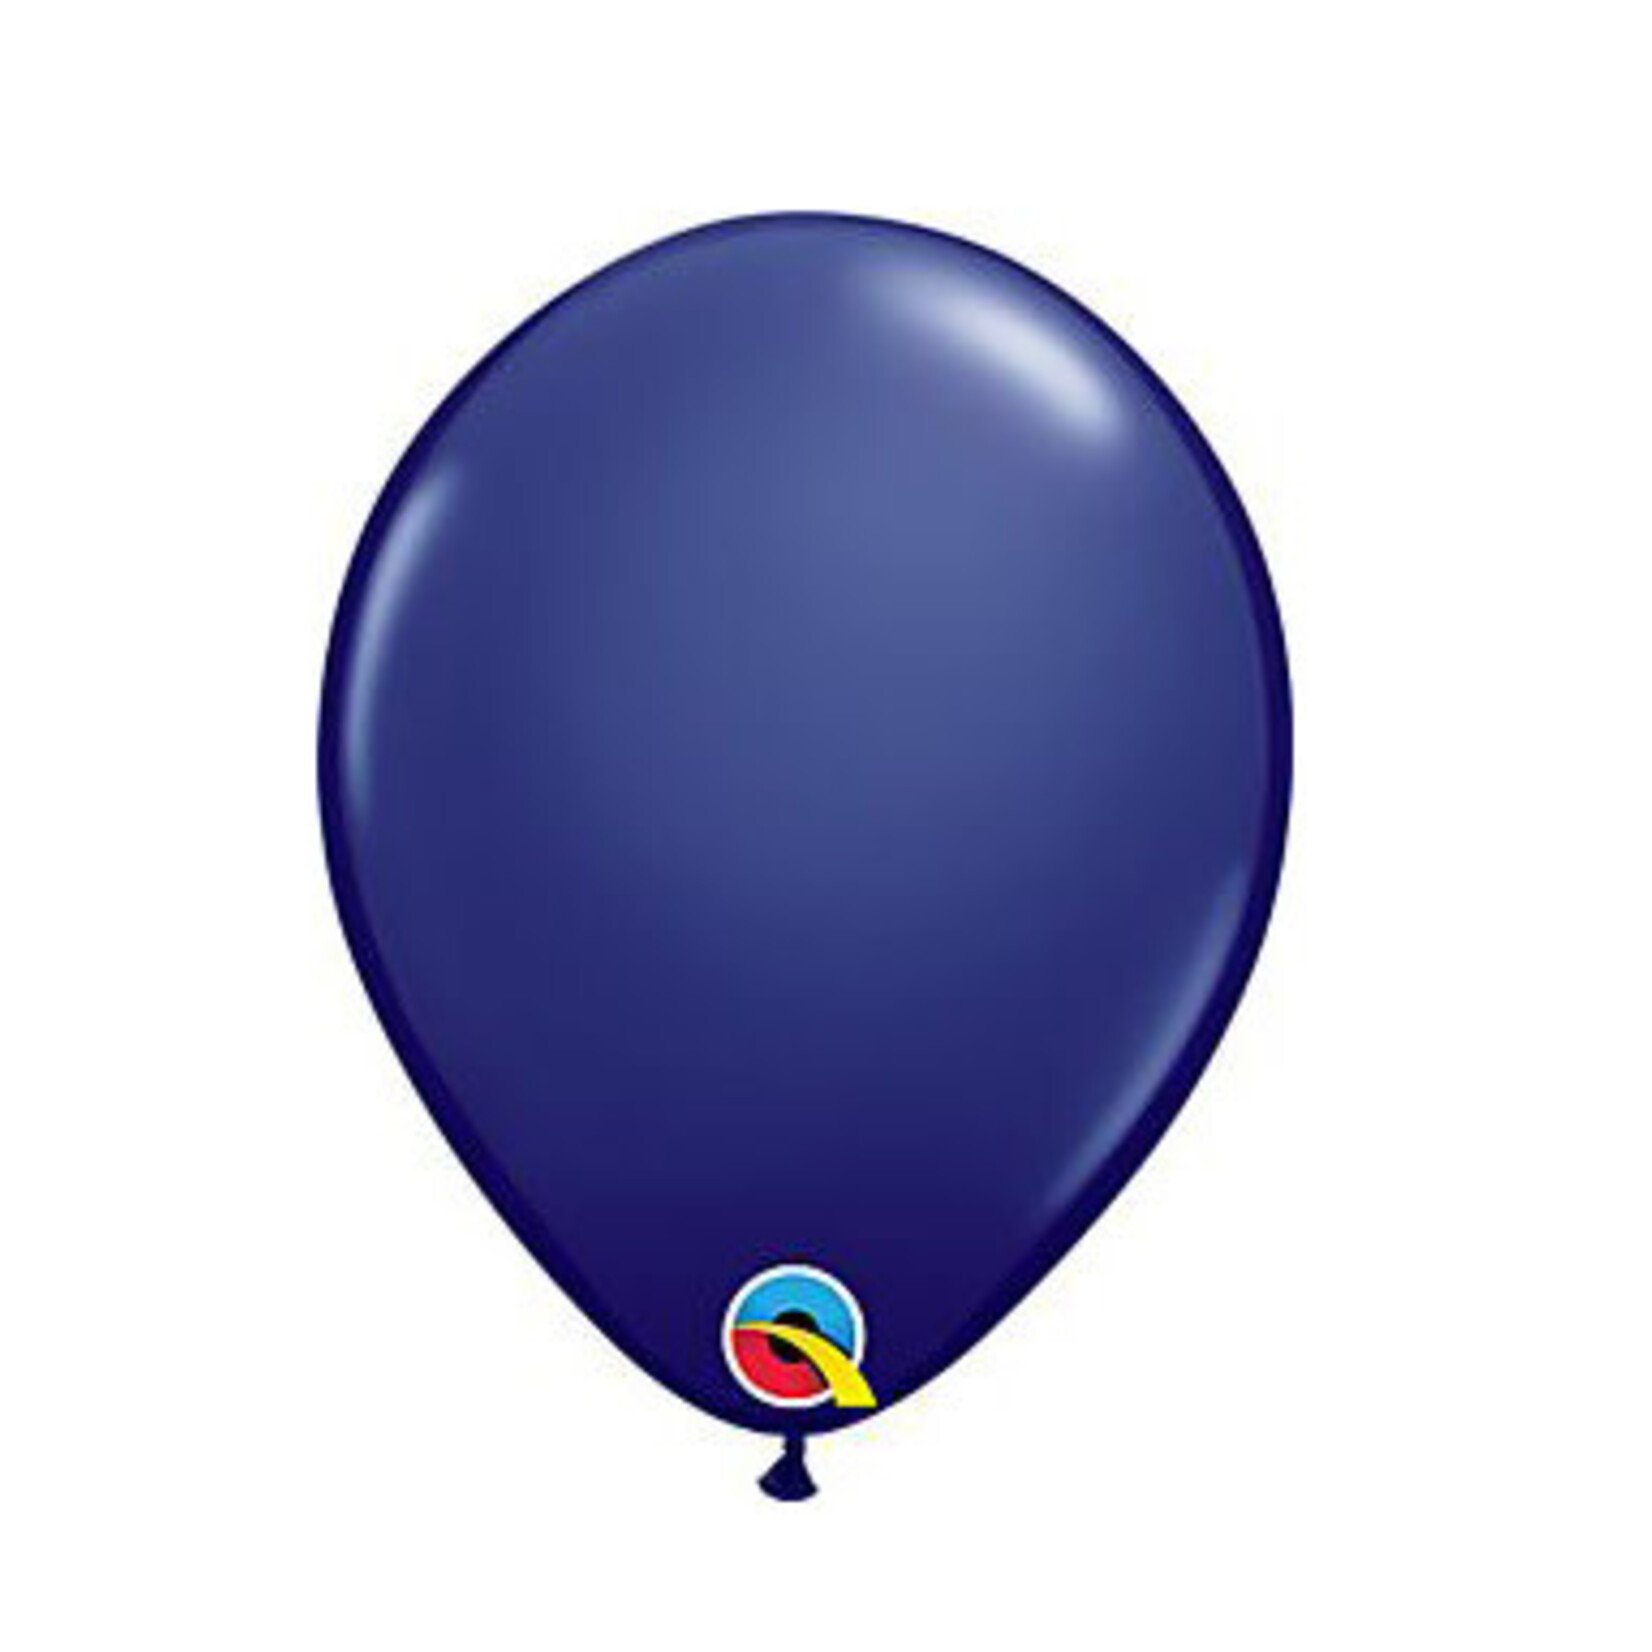 qualatex 5" Navy Blue Qualatex Balloons - 100ct.